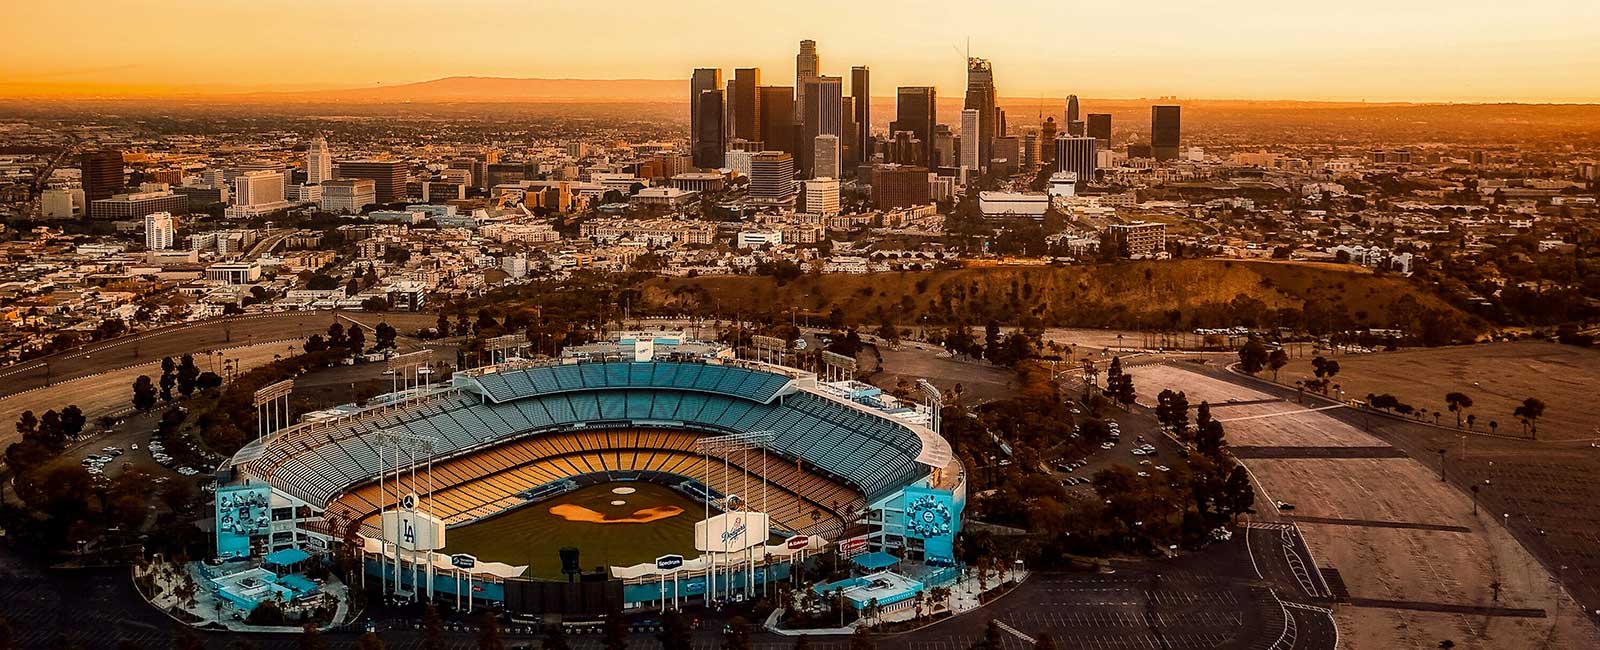 Los Angeles and Dodgers stadium